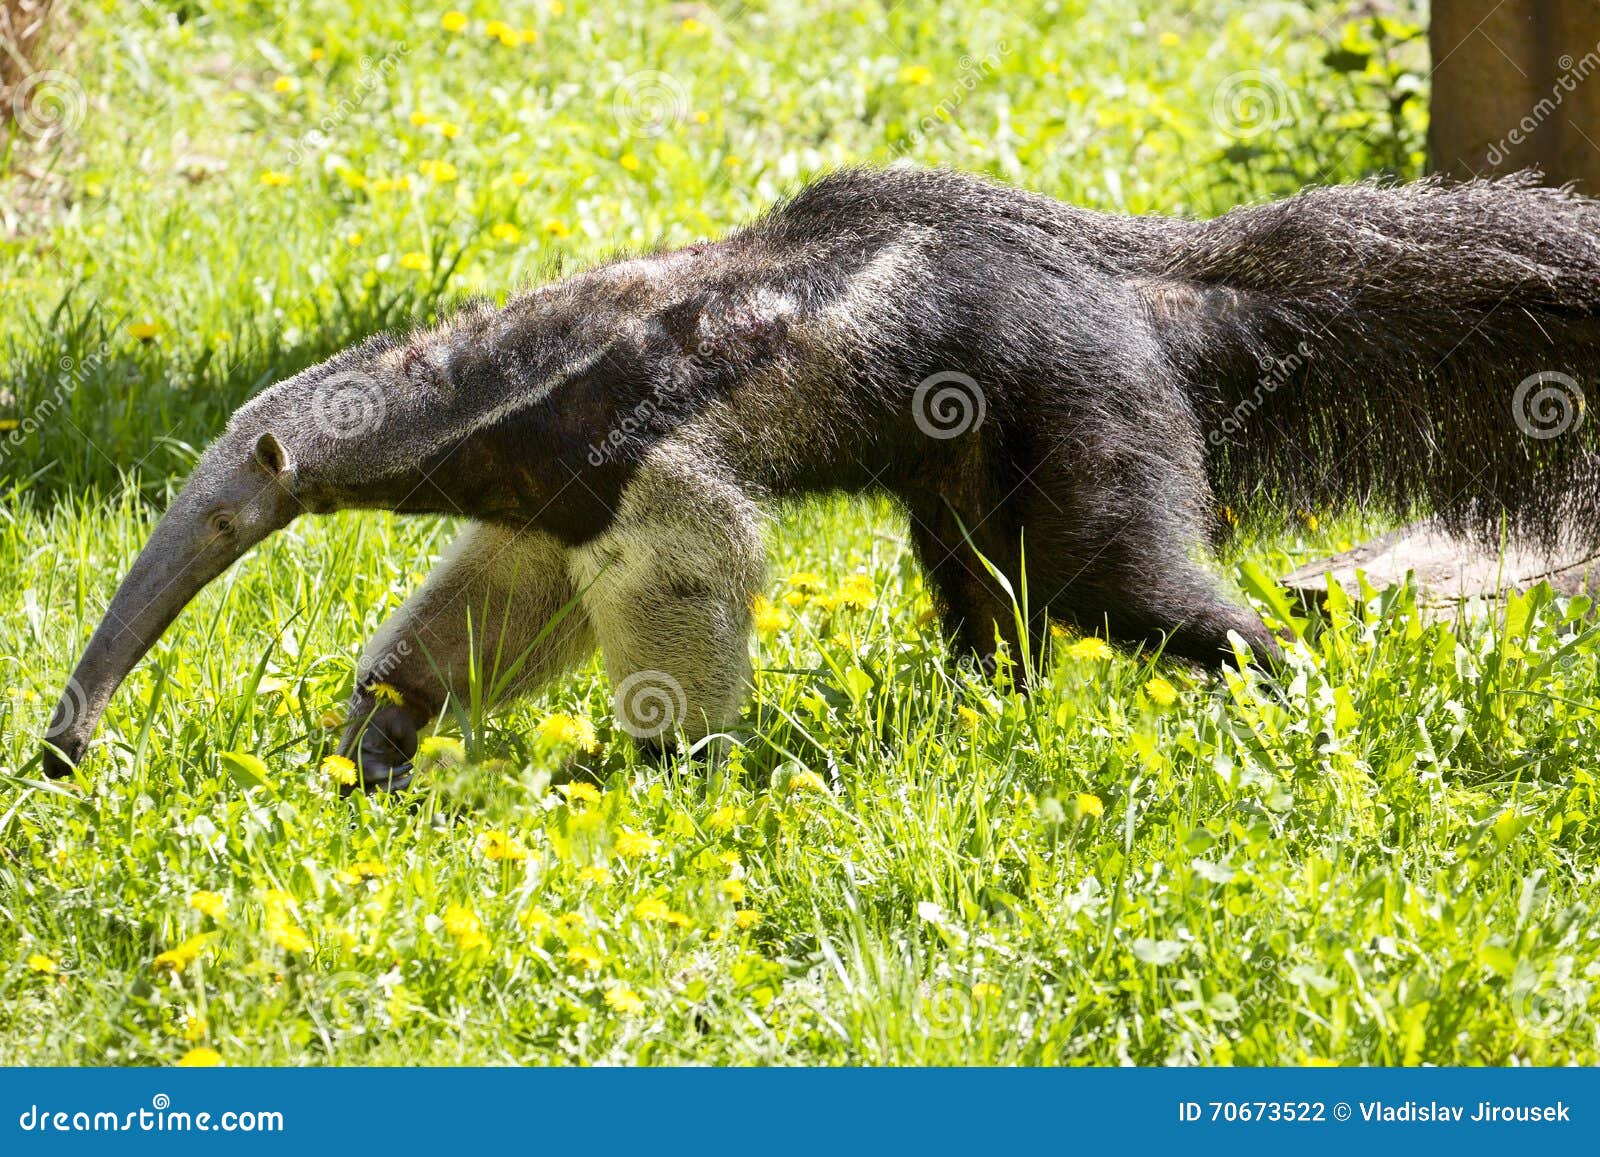 giant anteater, myrmecophaga tridactyla, inhabits the llanos, feeds mainly termites